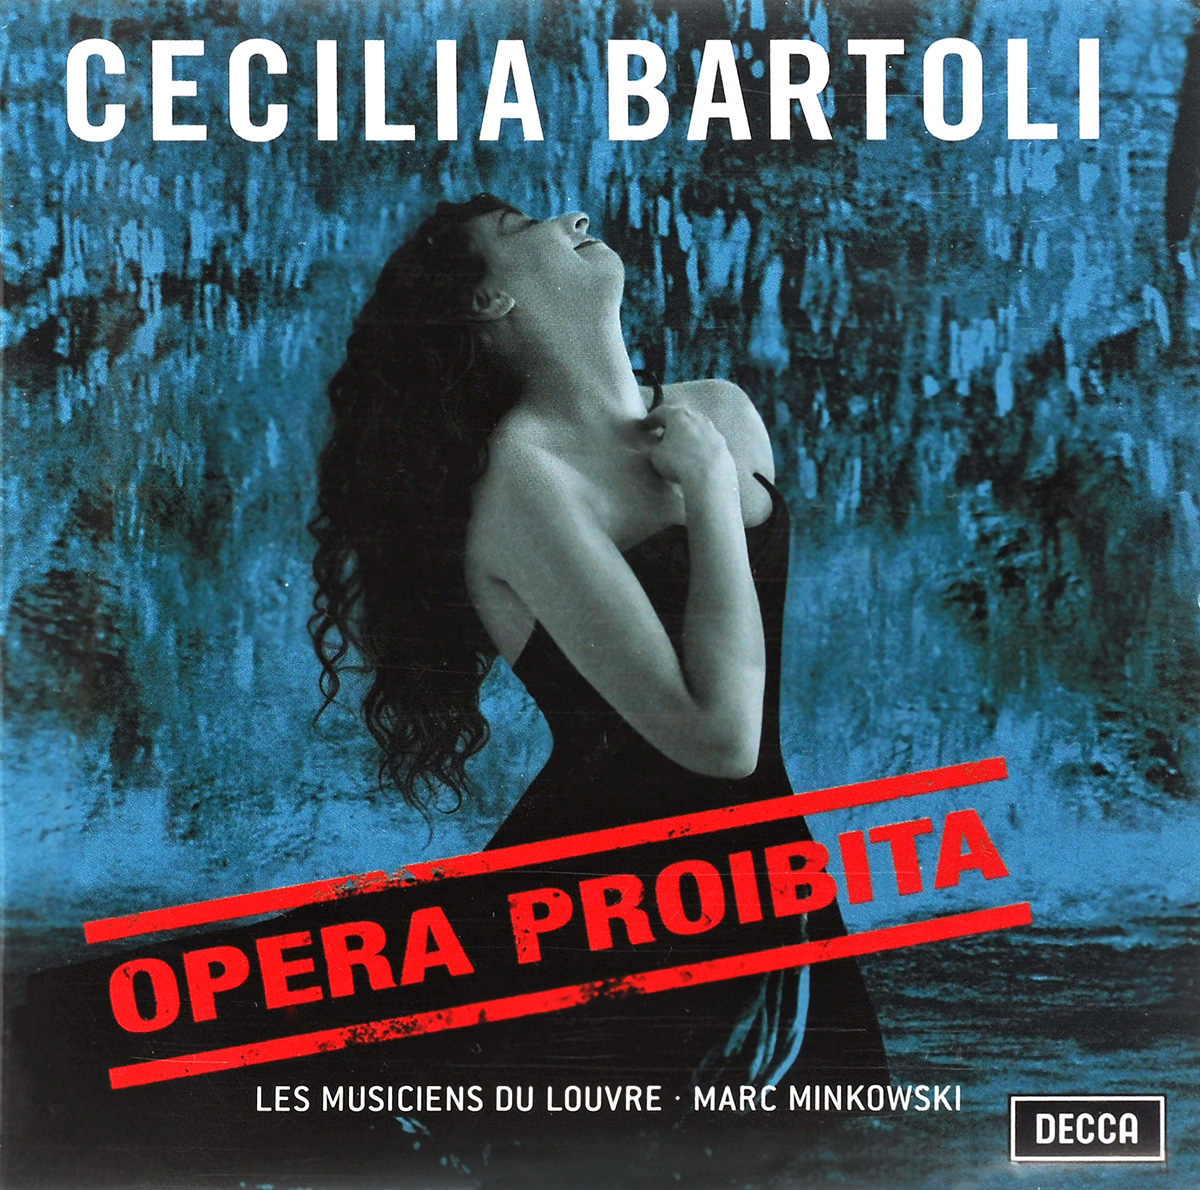 Cecilia Bartoli. Marc Minkowski. Opera Proibita